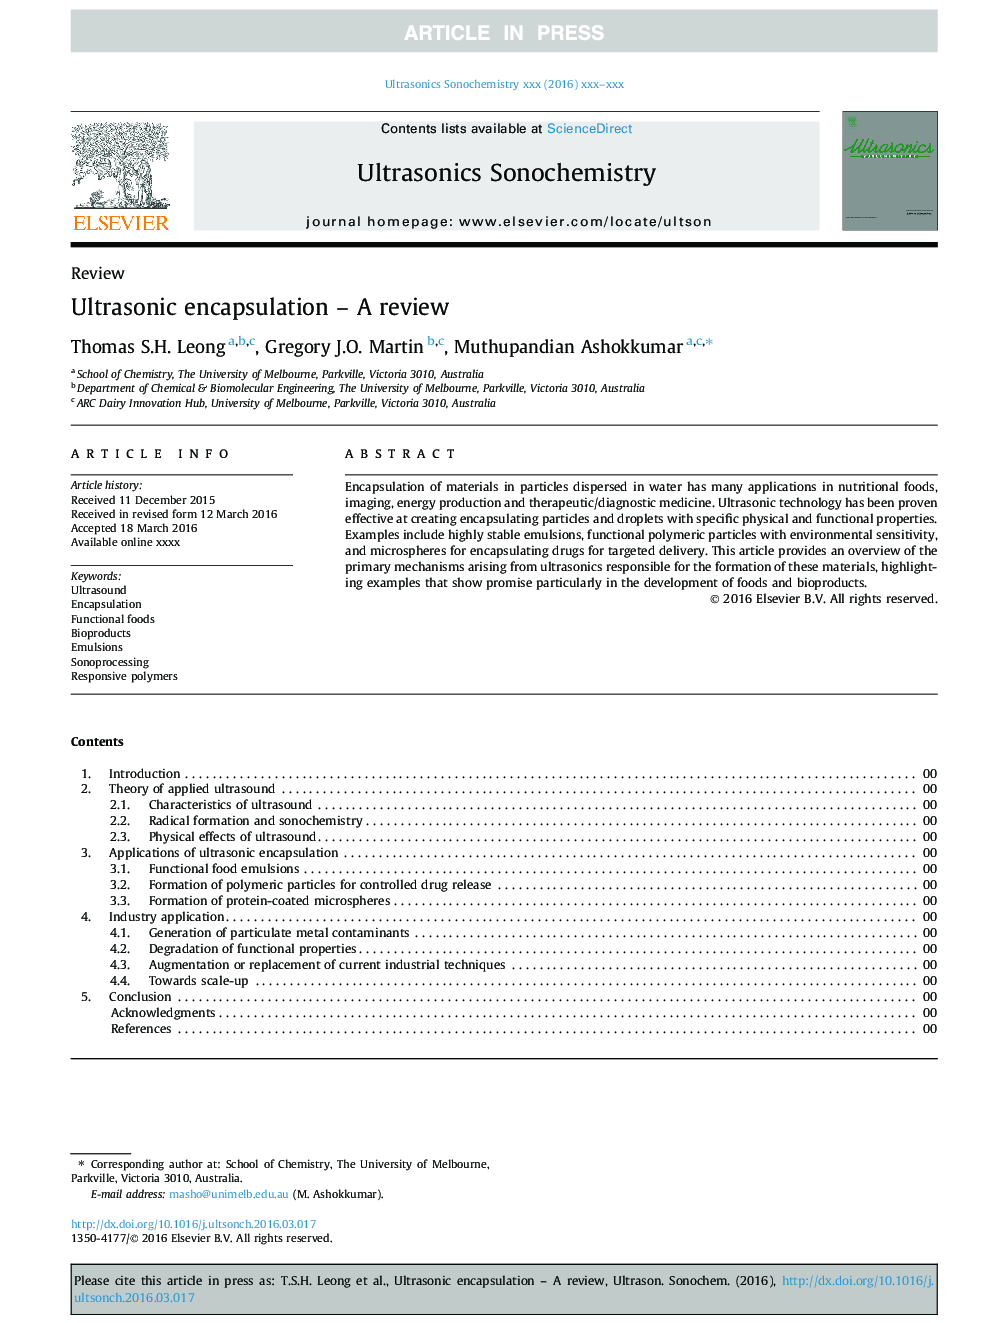 Ultrasonic encapsulation - A review